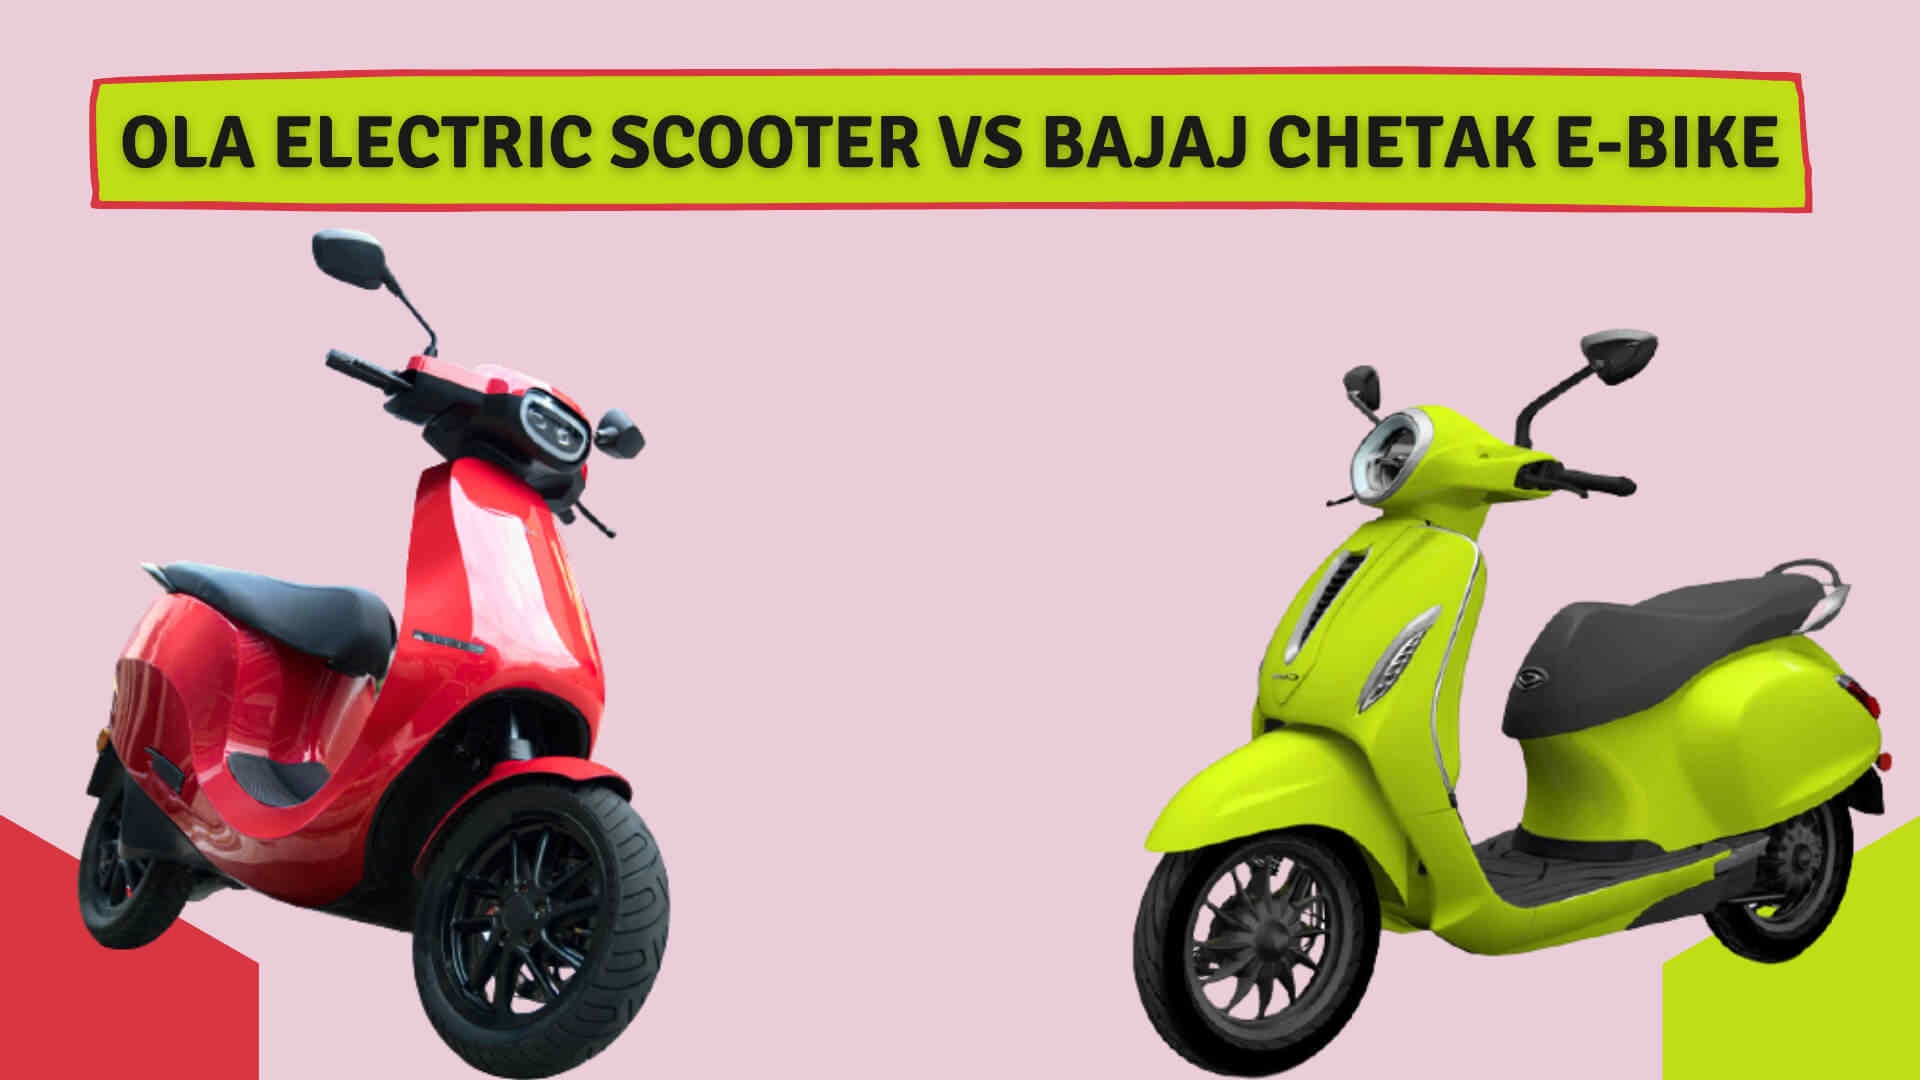 https://e-vehicleinfo.com/ola-electric-scooter-vs-bajaj-chetak/